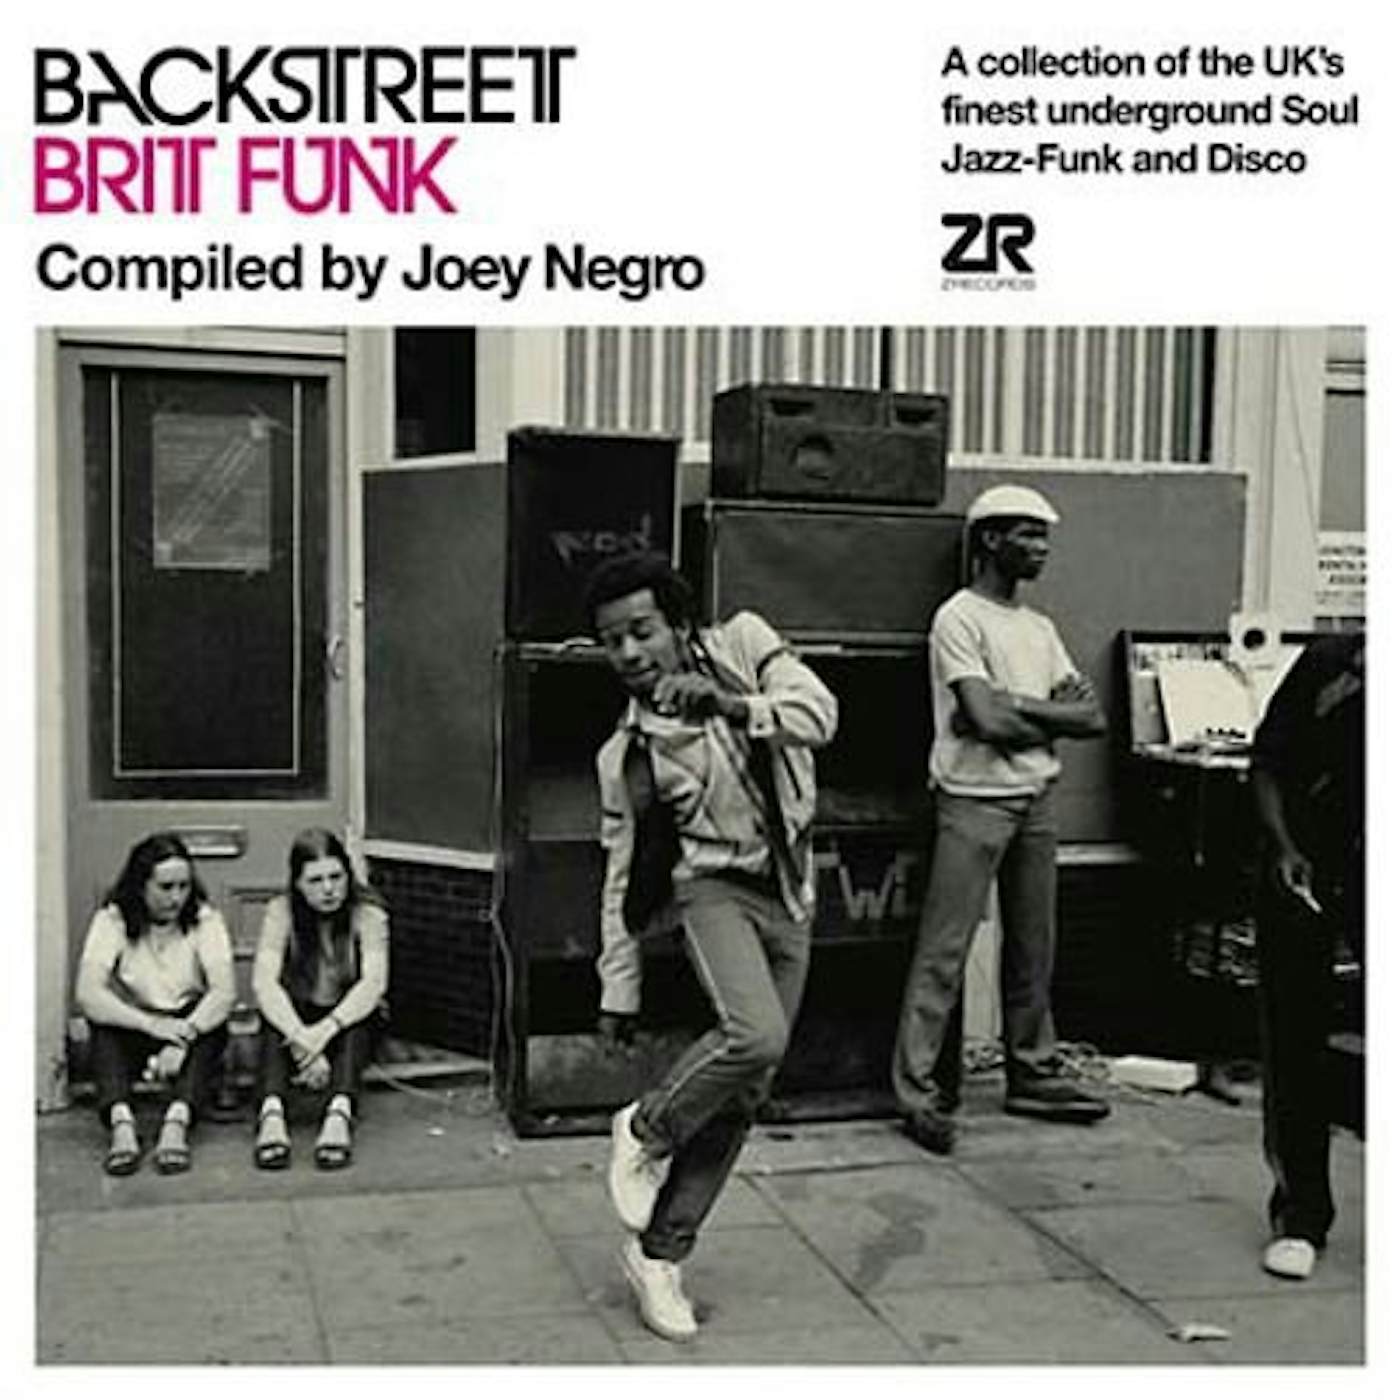 Joey Negro Backstreet Brit Funk Vol. 1 Vinyl Record